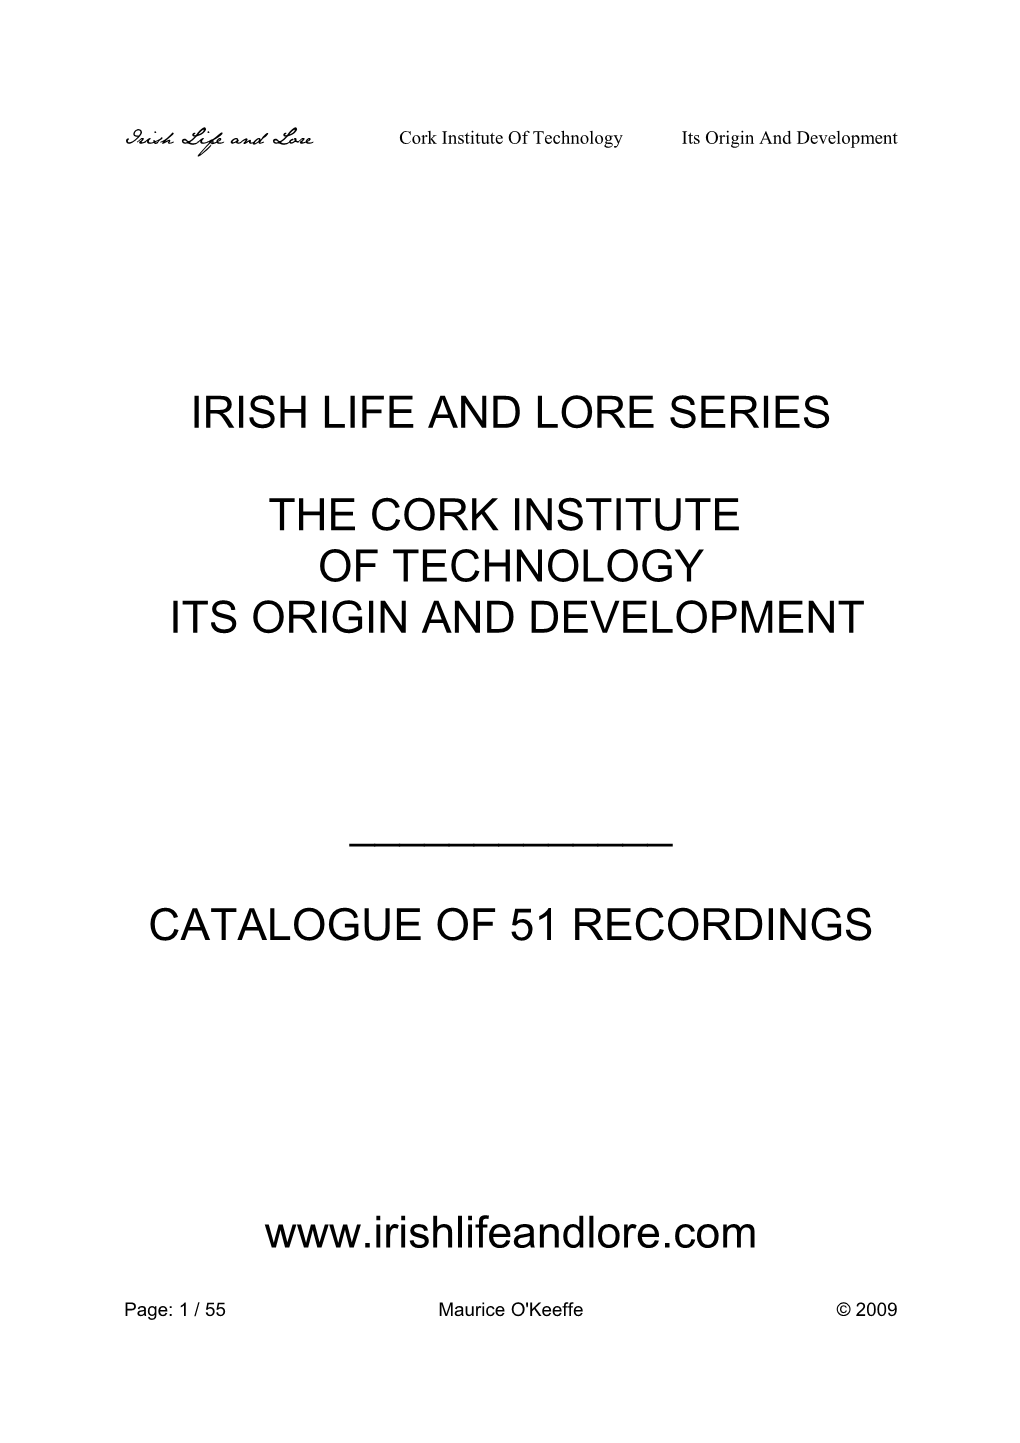 Irish Life and Lore Series the Cork Institute of Technology Its Origin and Development